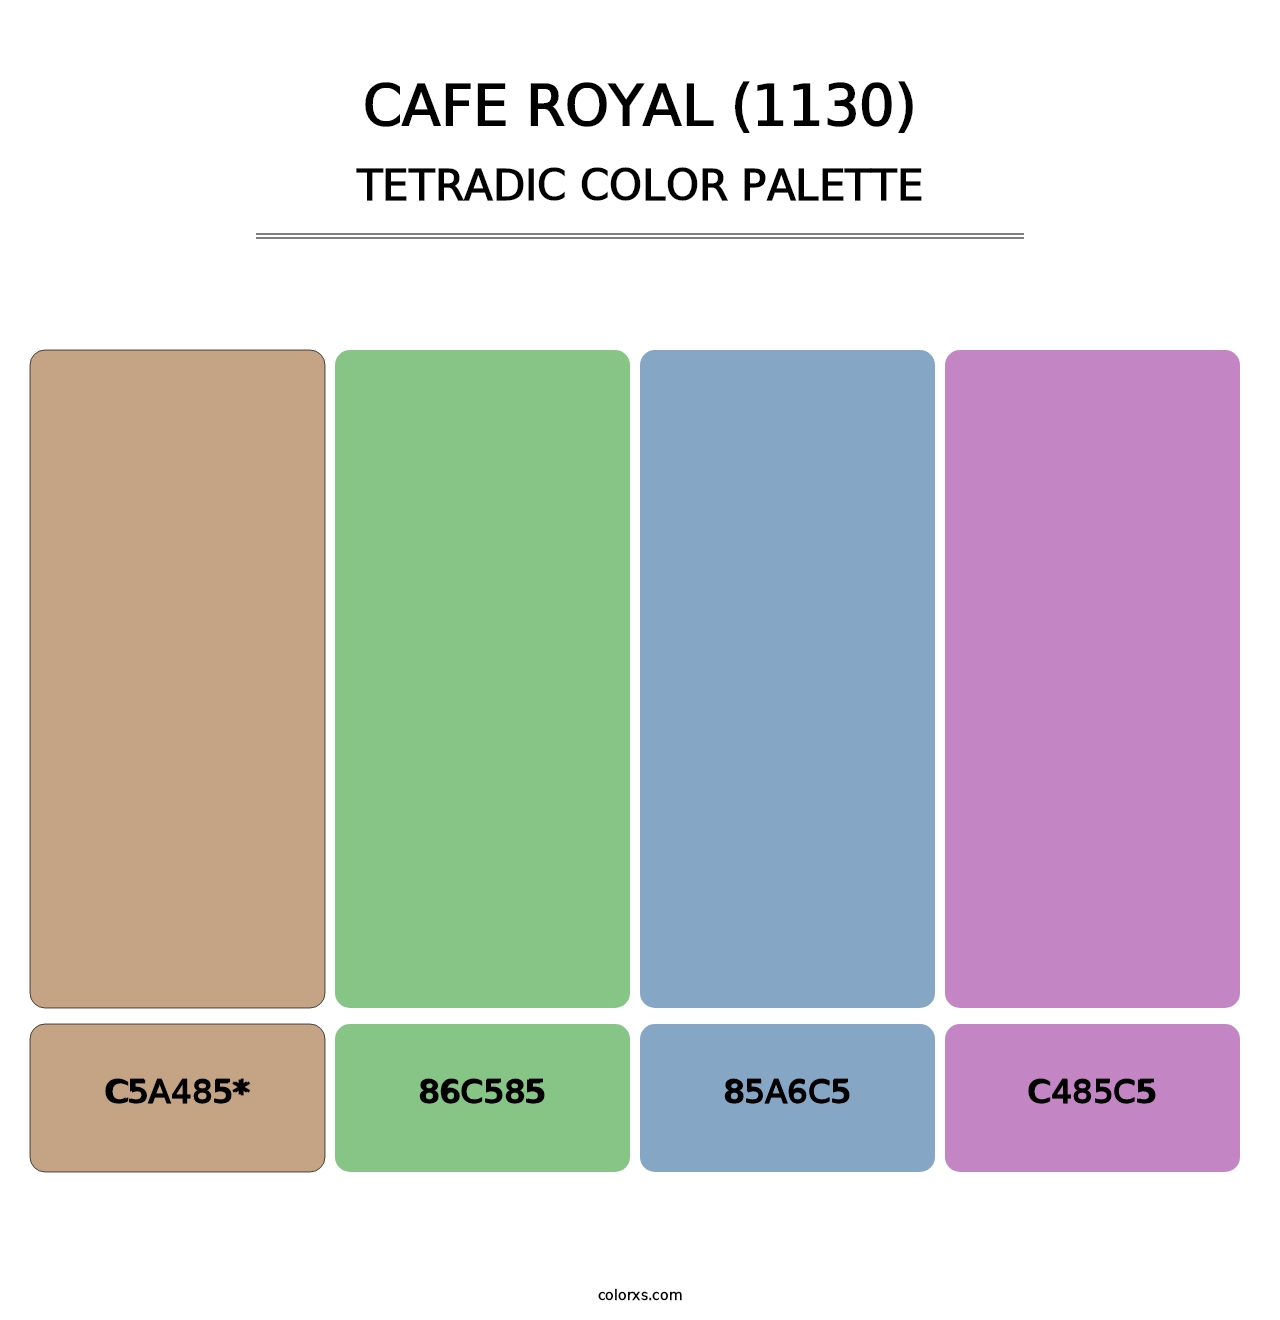 Cafe Royal (1130) - Tetradic Color Palette